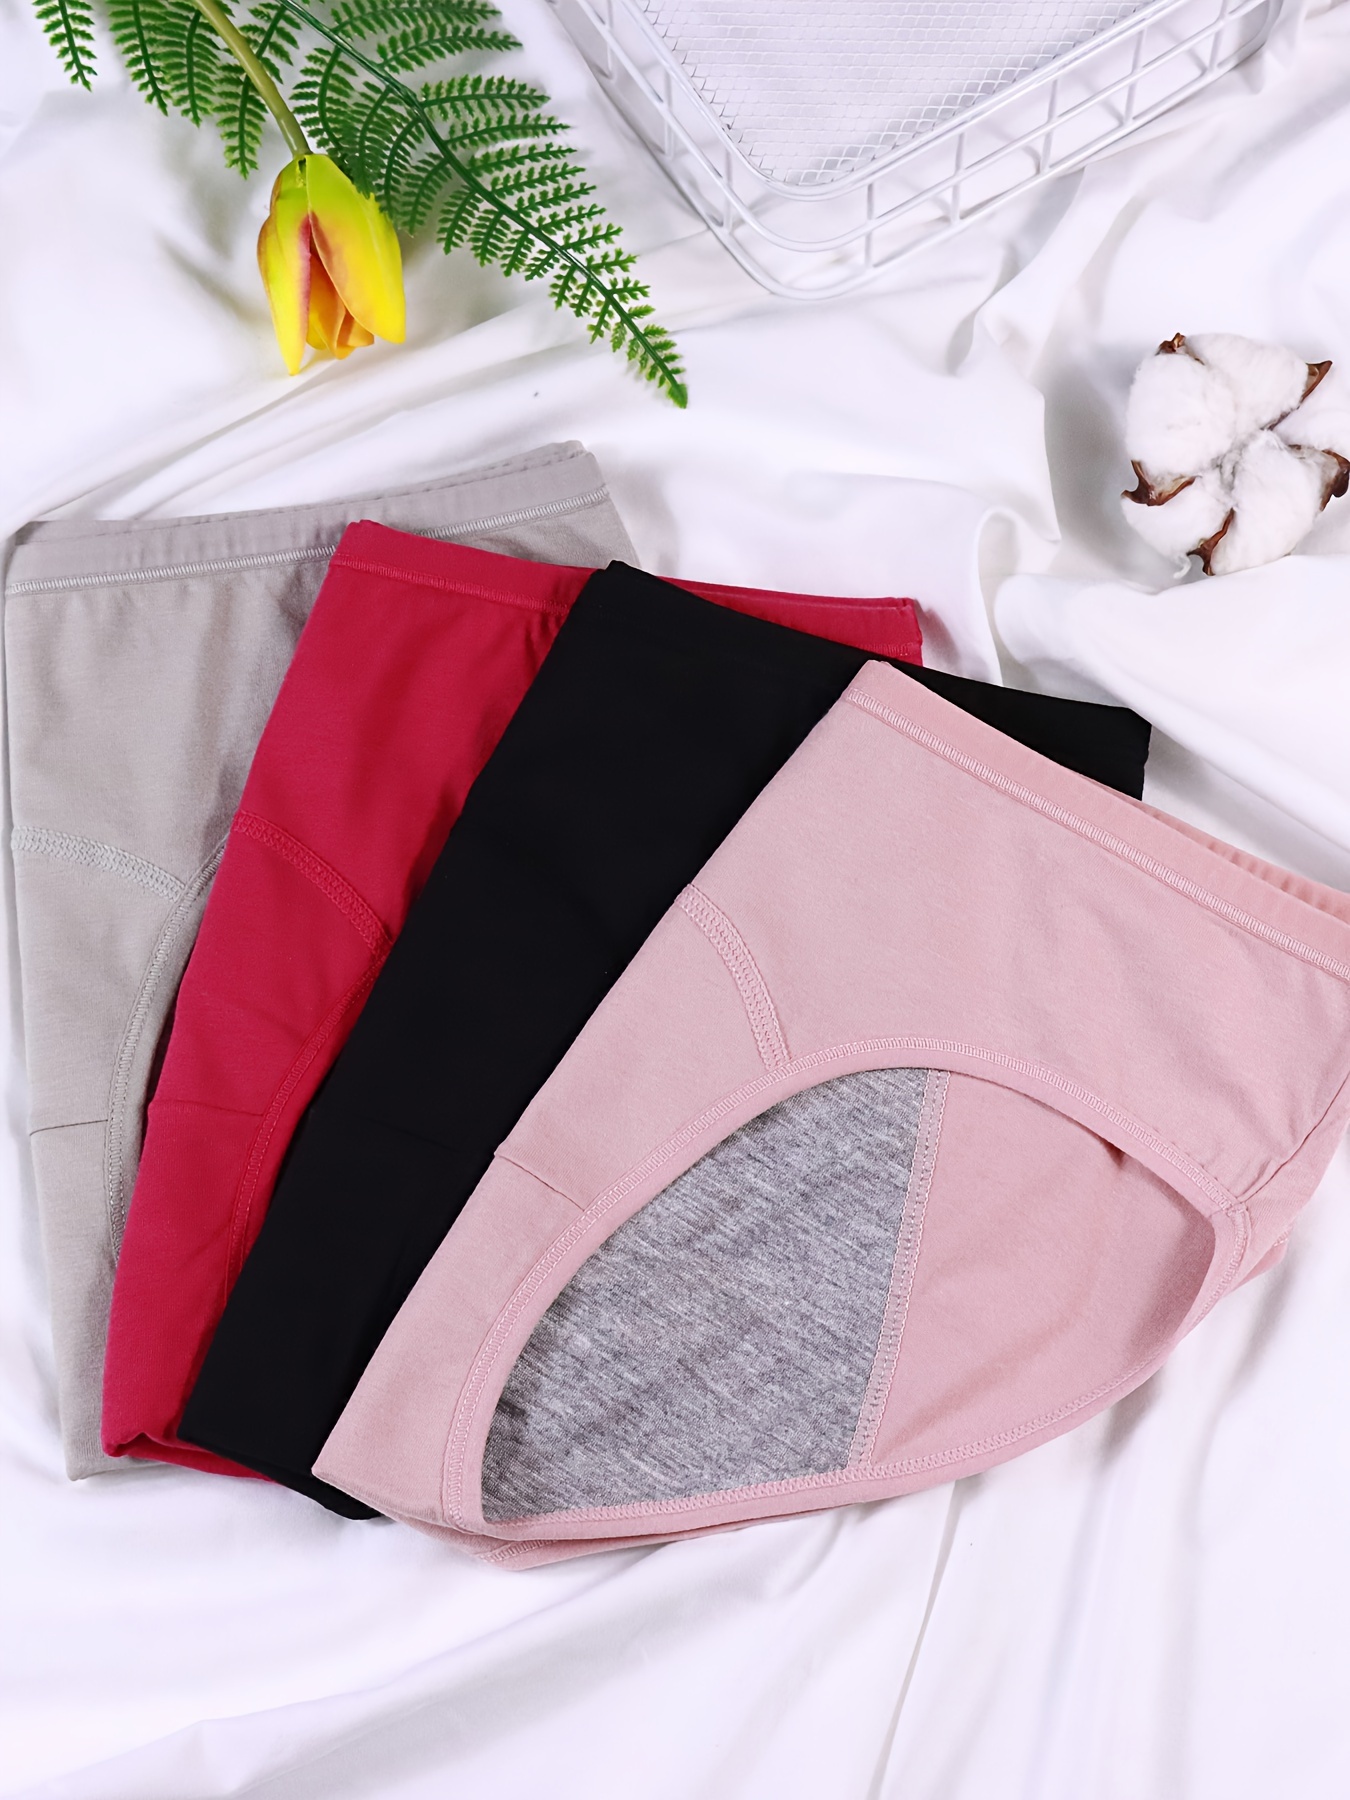 Teen Period Panties Cotton Girls Leak Proof Menstrual Underwear